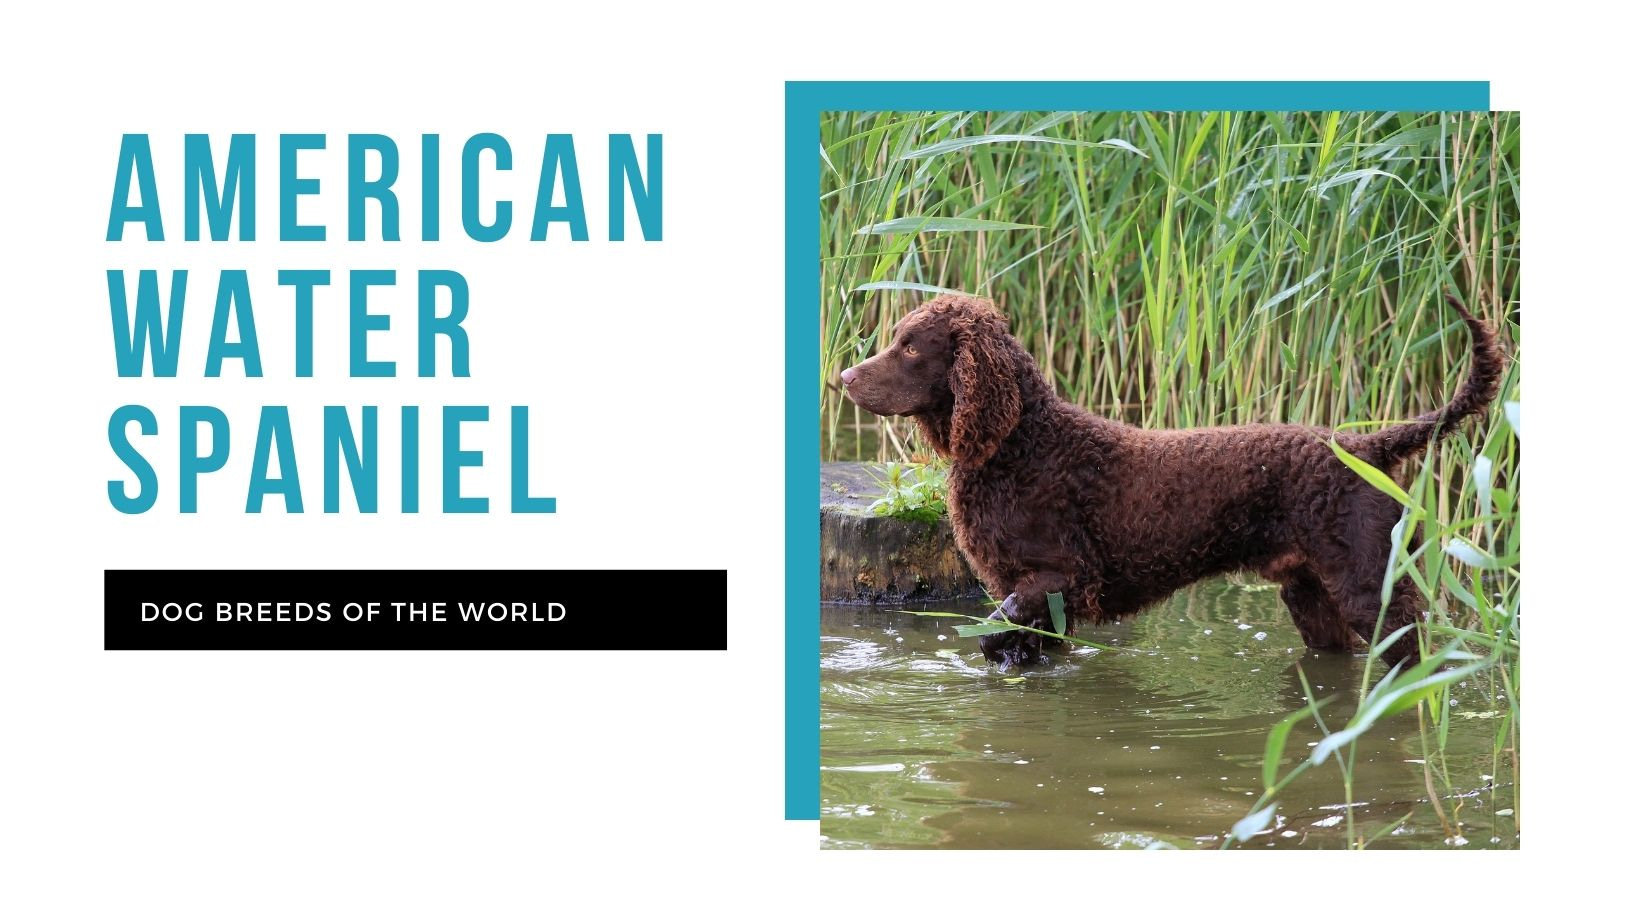 American water spaniel